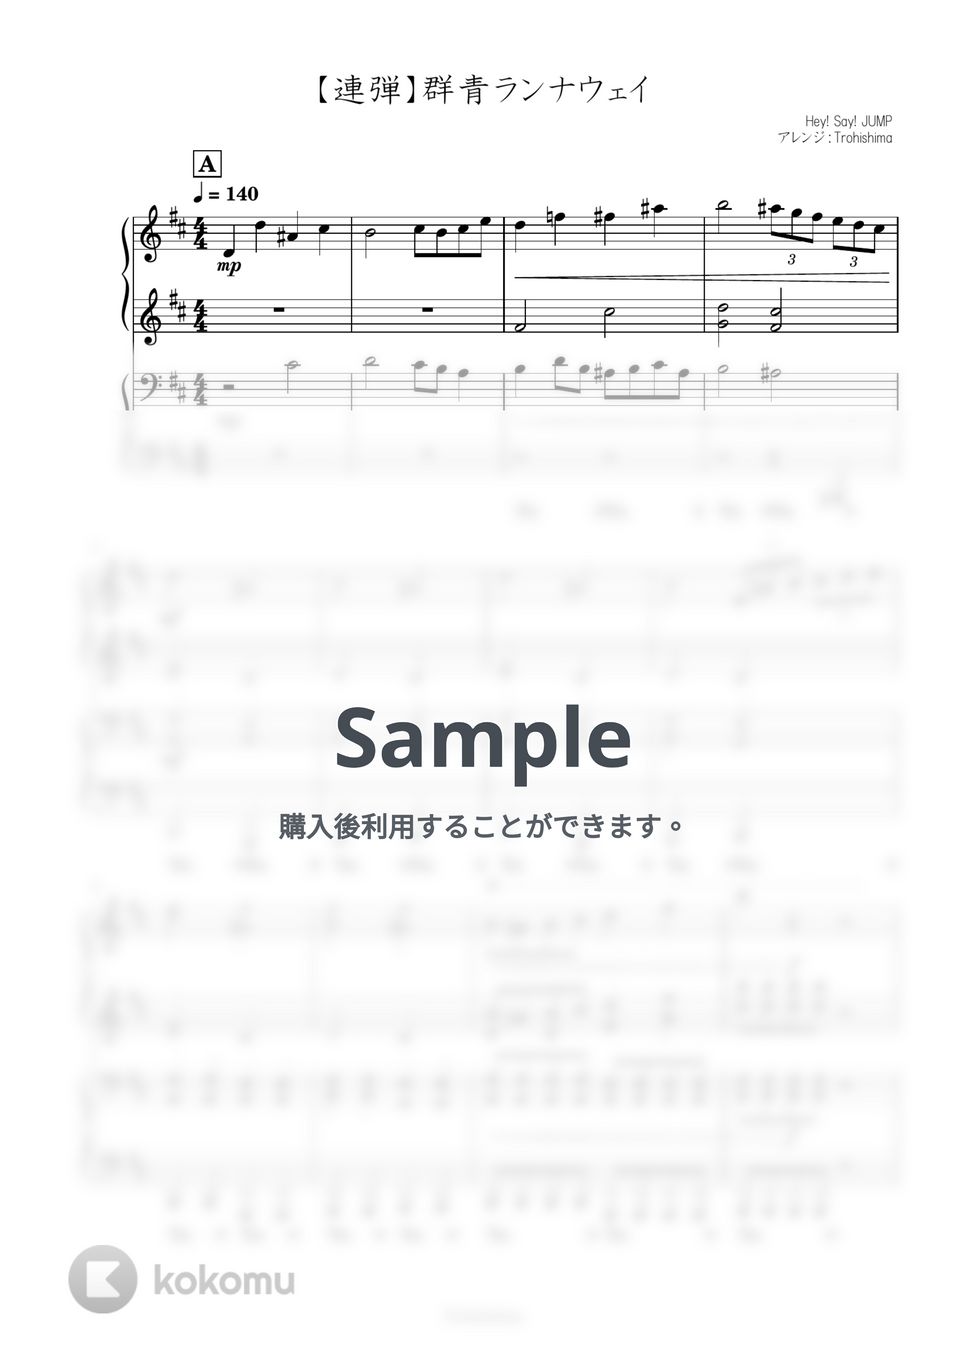 Hey! Say! JUMP - 群青ランナウェイ (ピアノ連弾) by Trohishima